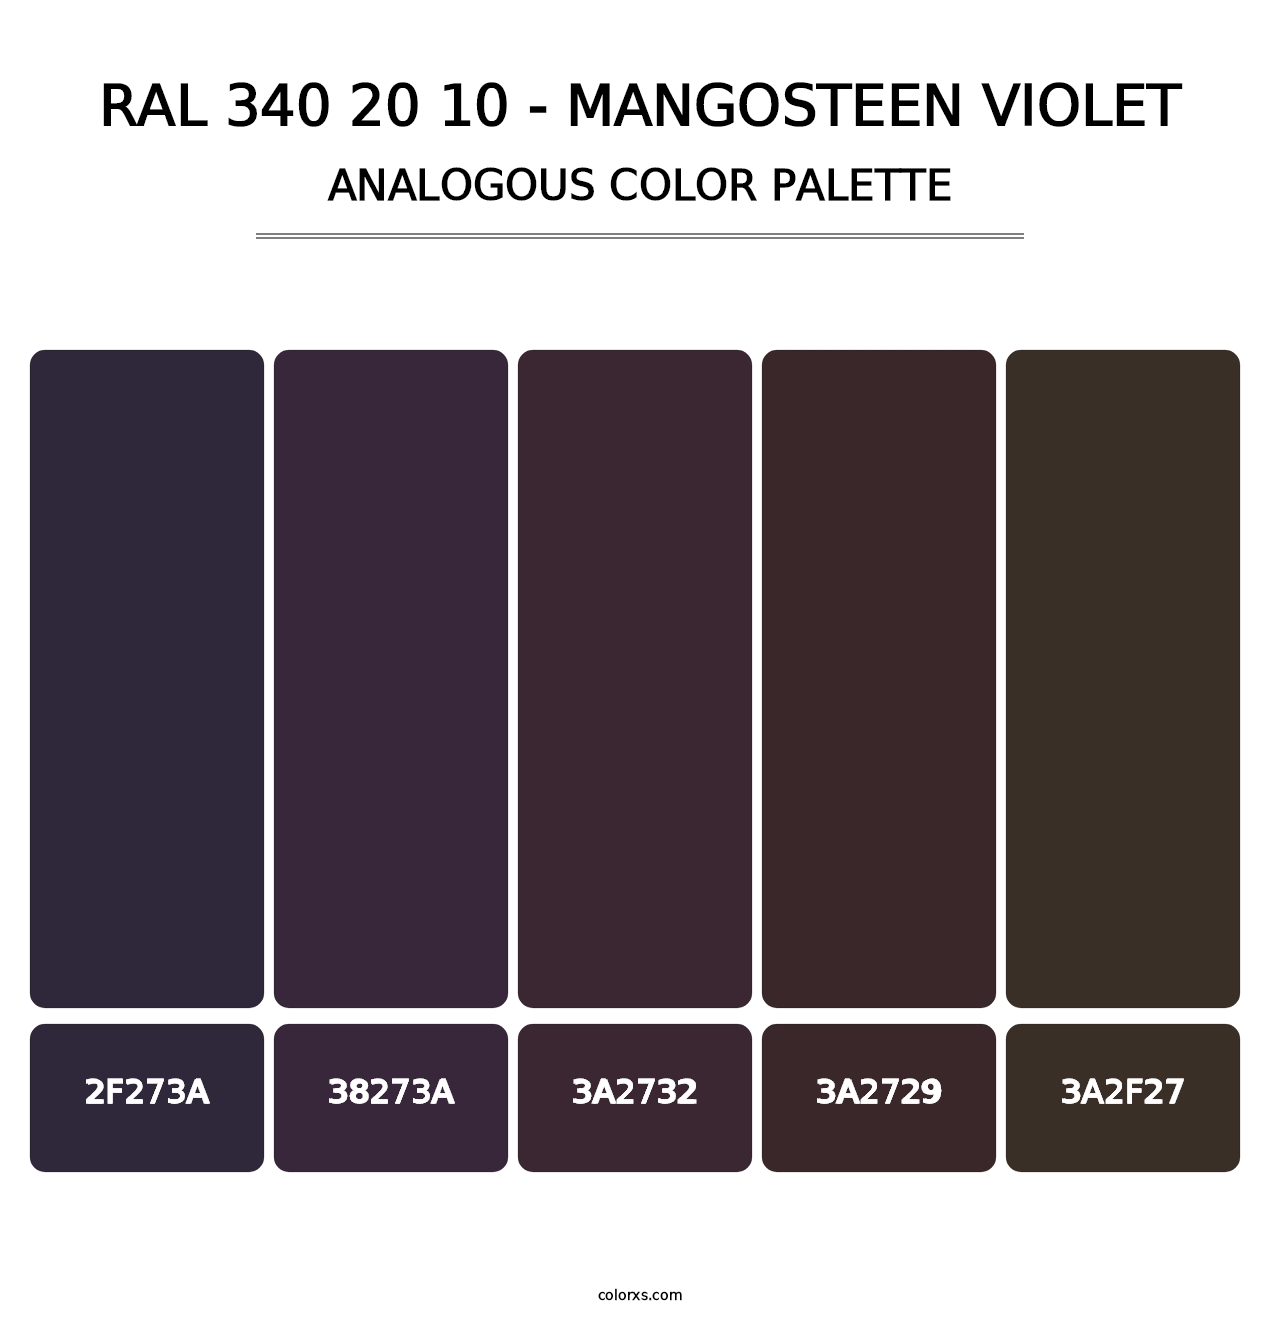 RAL 340 20 10 - Mangosteen Violet - Analogous Color Palette